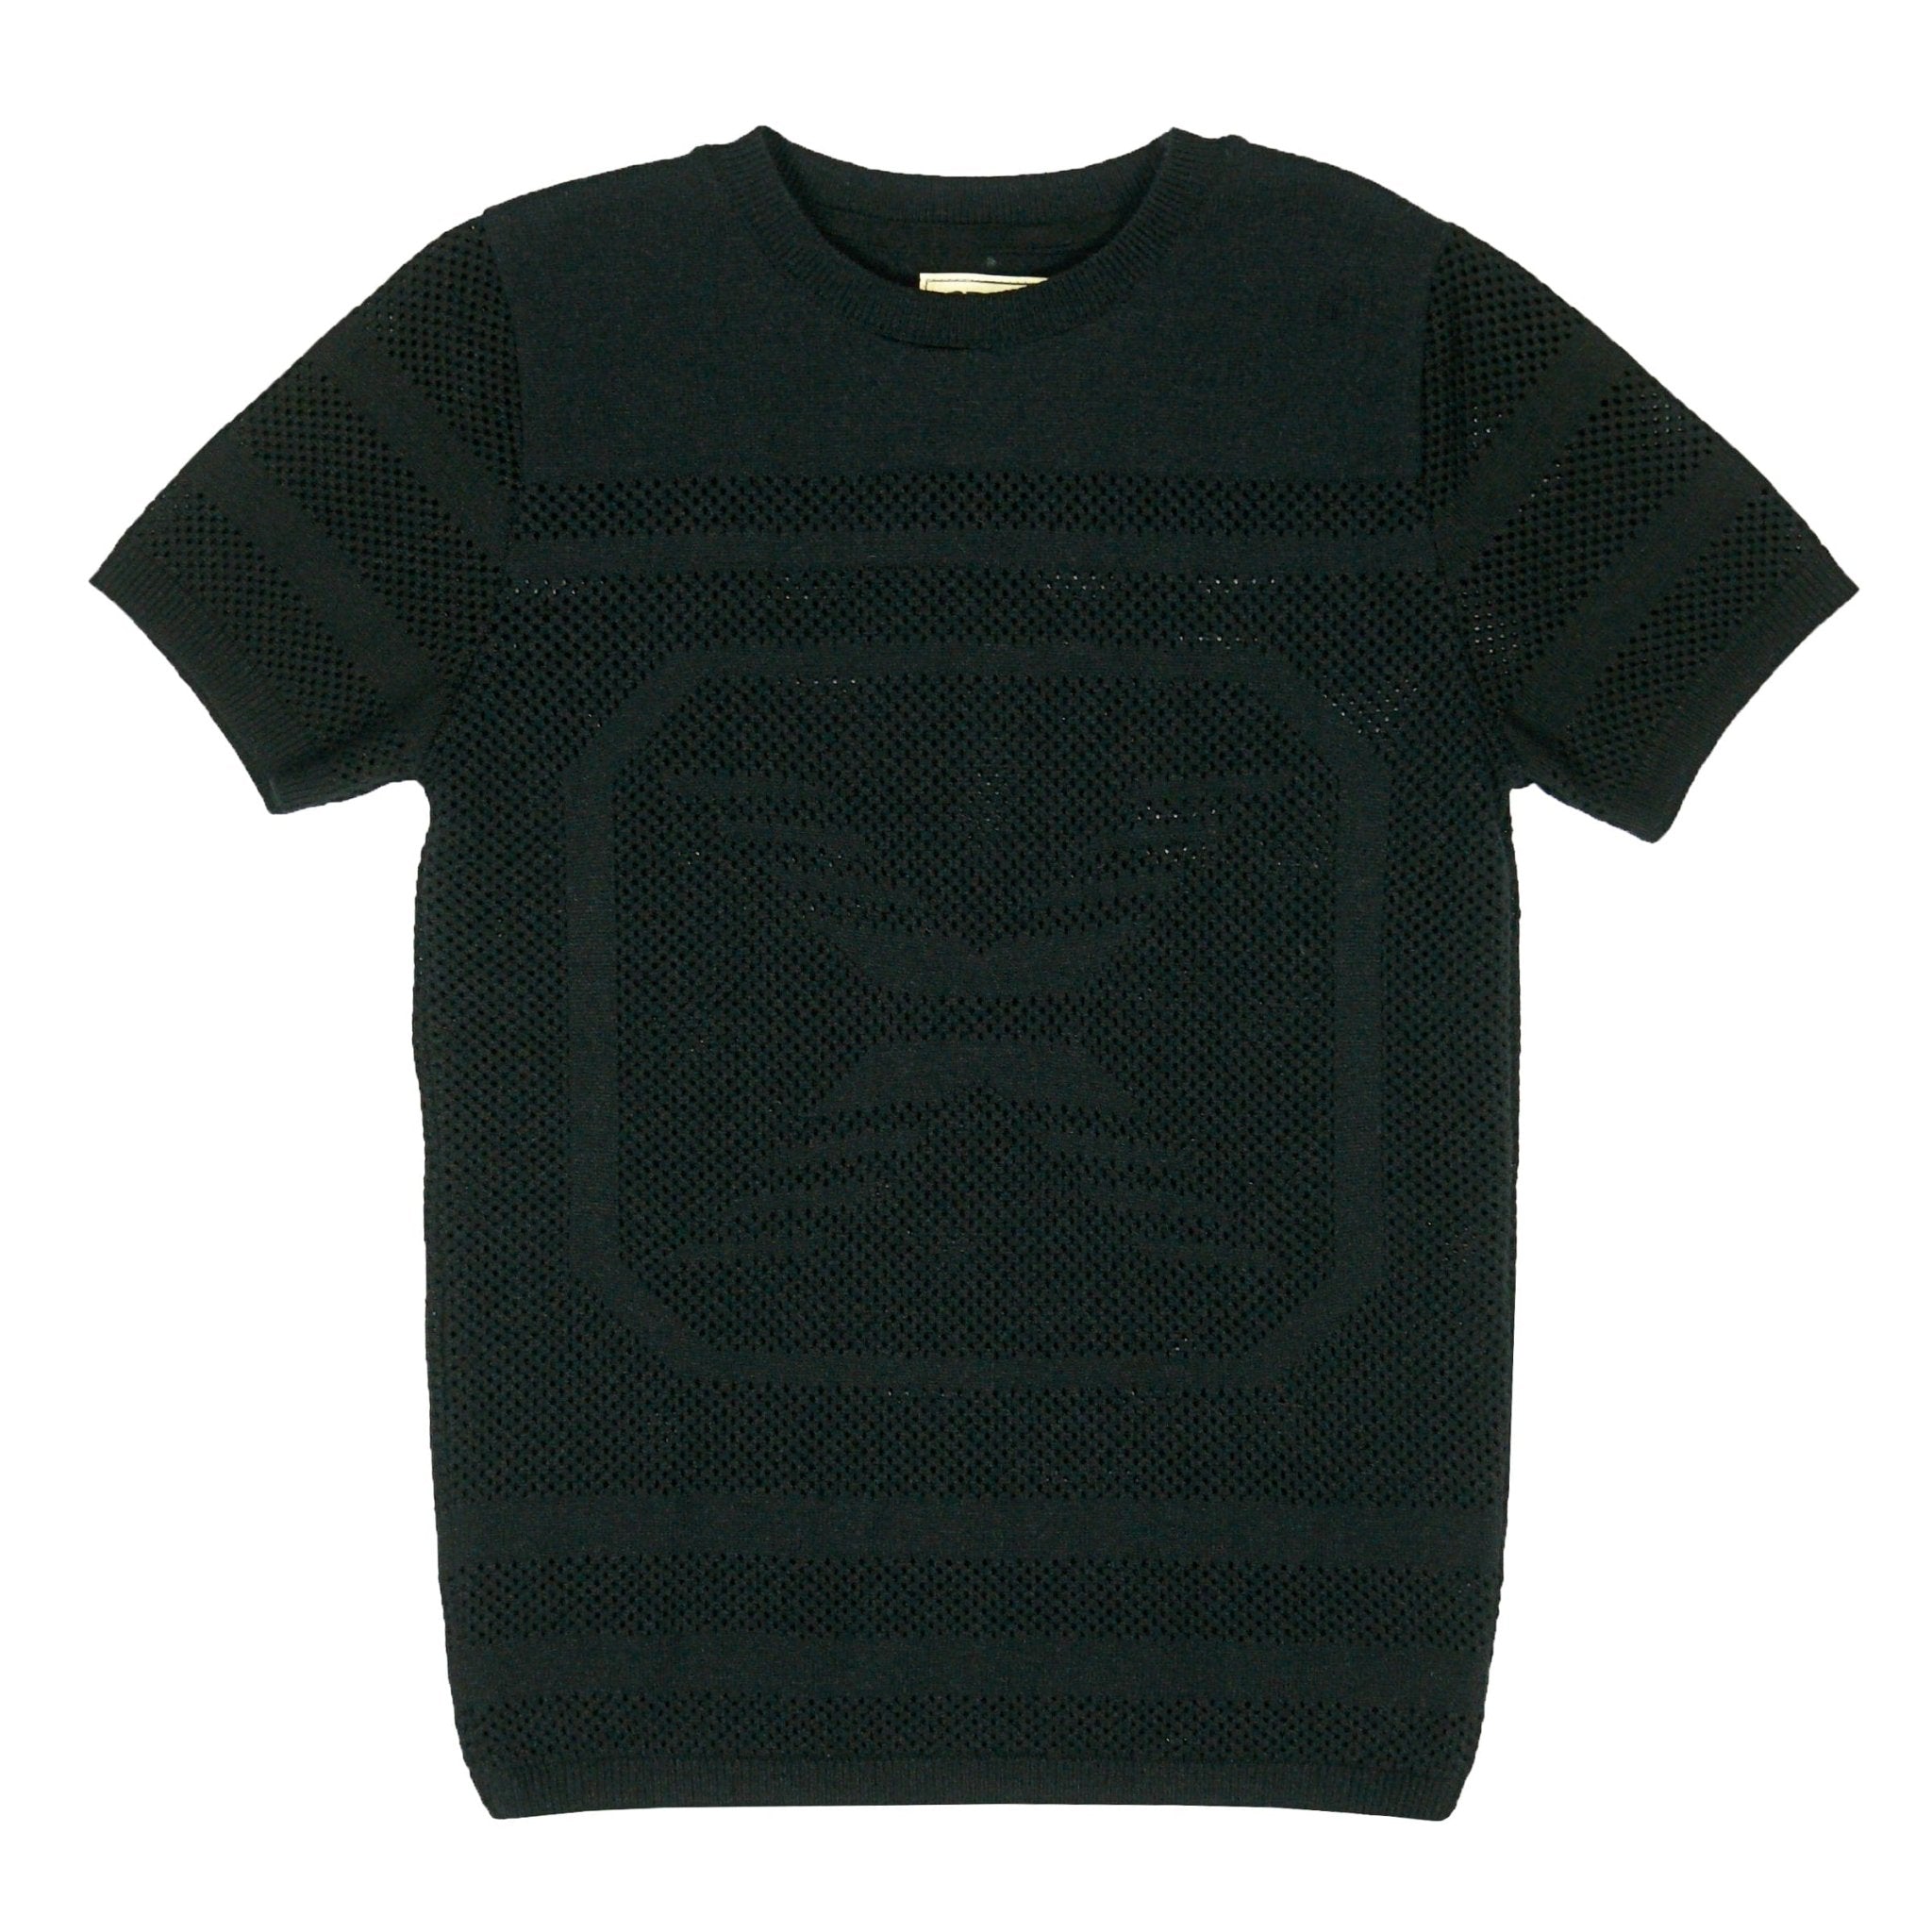 SOF Premium Logo Knit Jersey in black